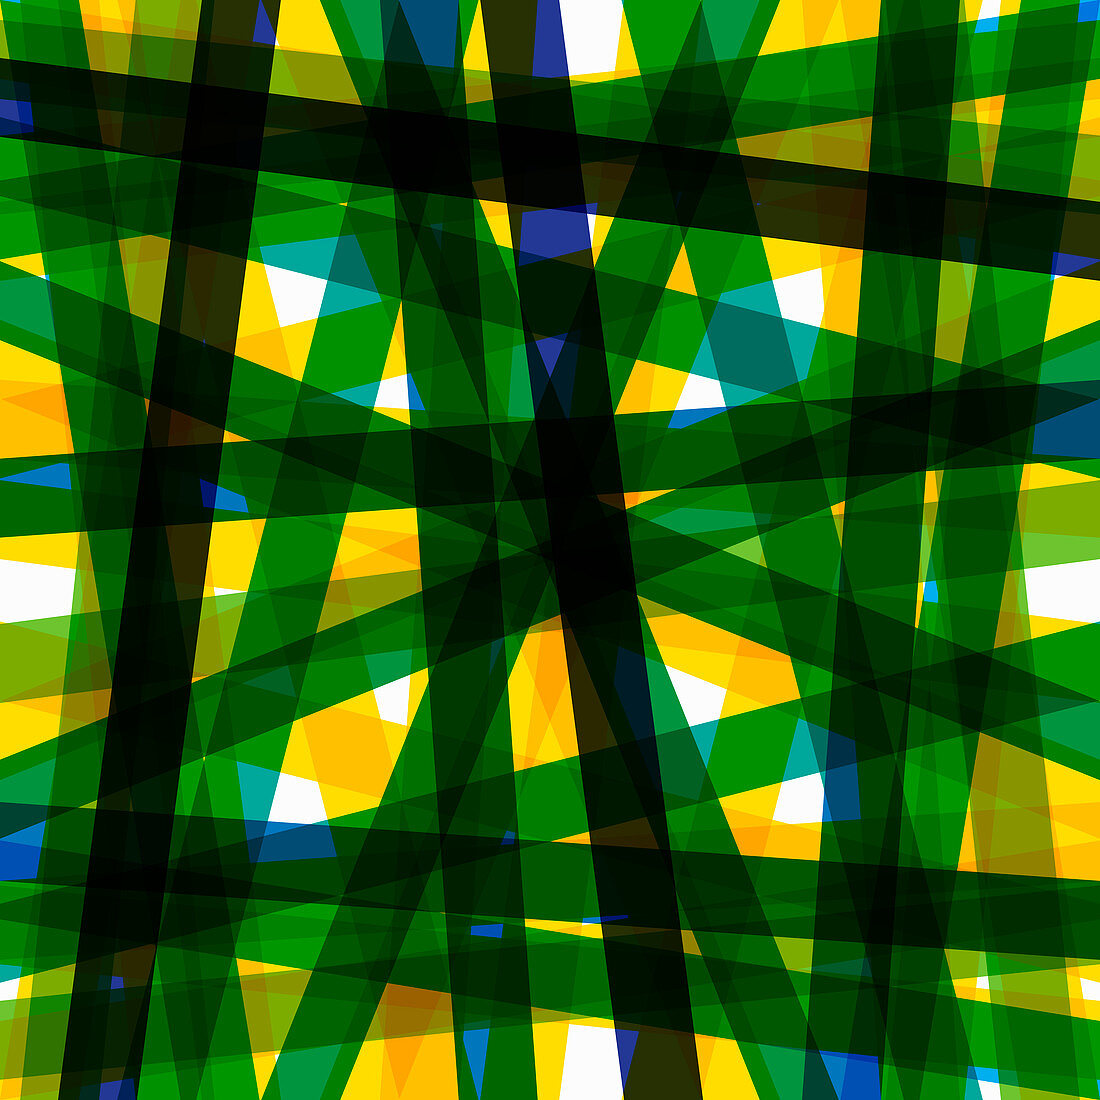 Abstract crisscross network pattern, illustration